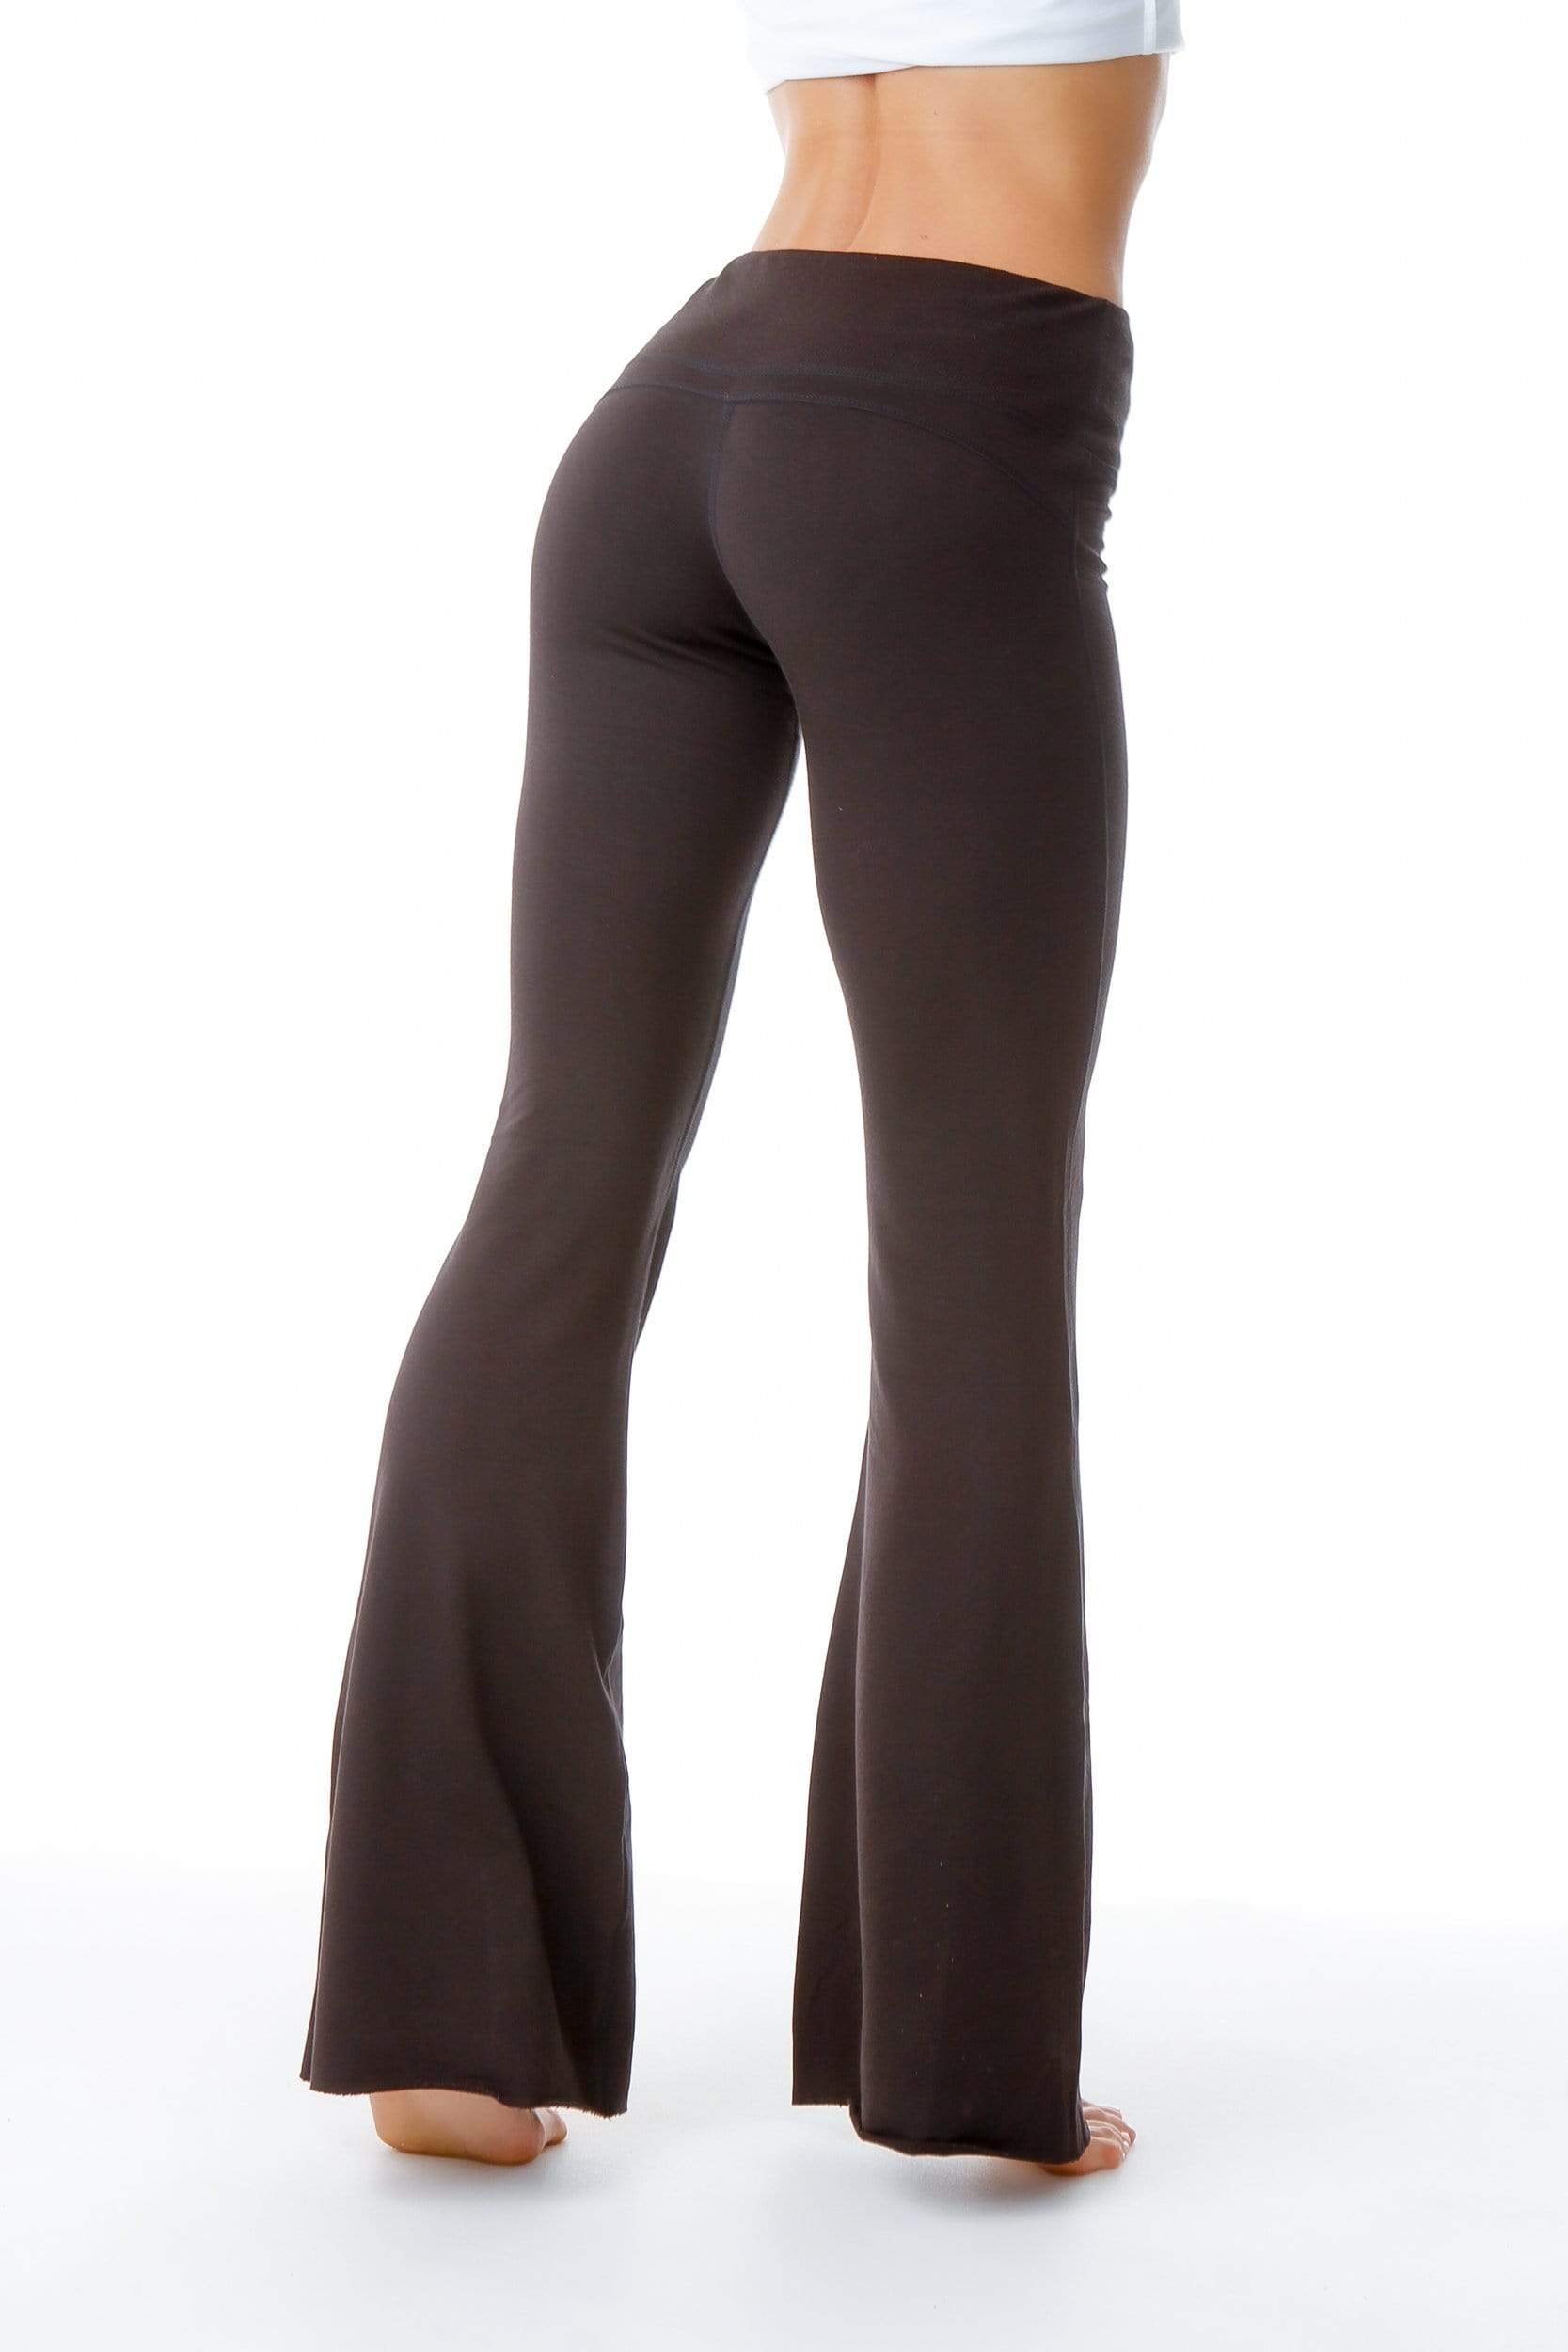 Flare Leggings Yoga Pants Women High Waist Wide Leg Pants Women Gym Sports  Black | Fruugo AE